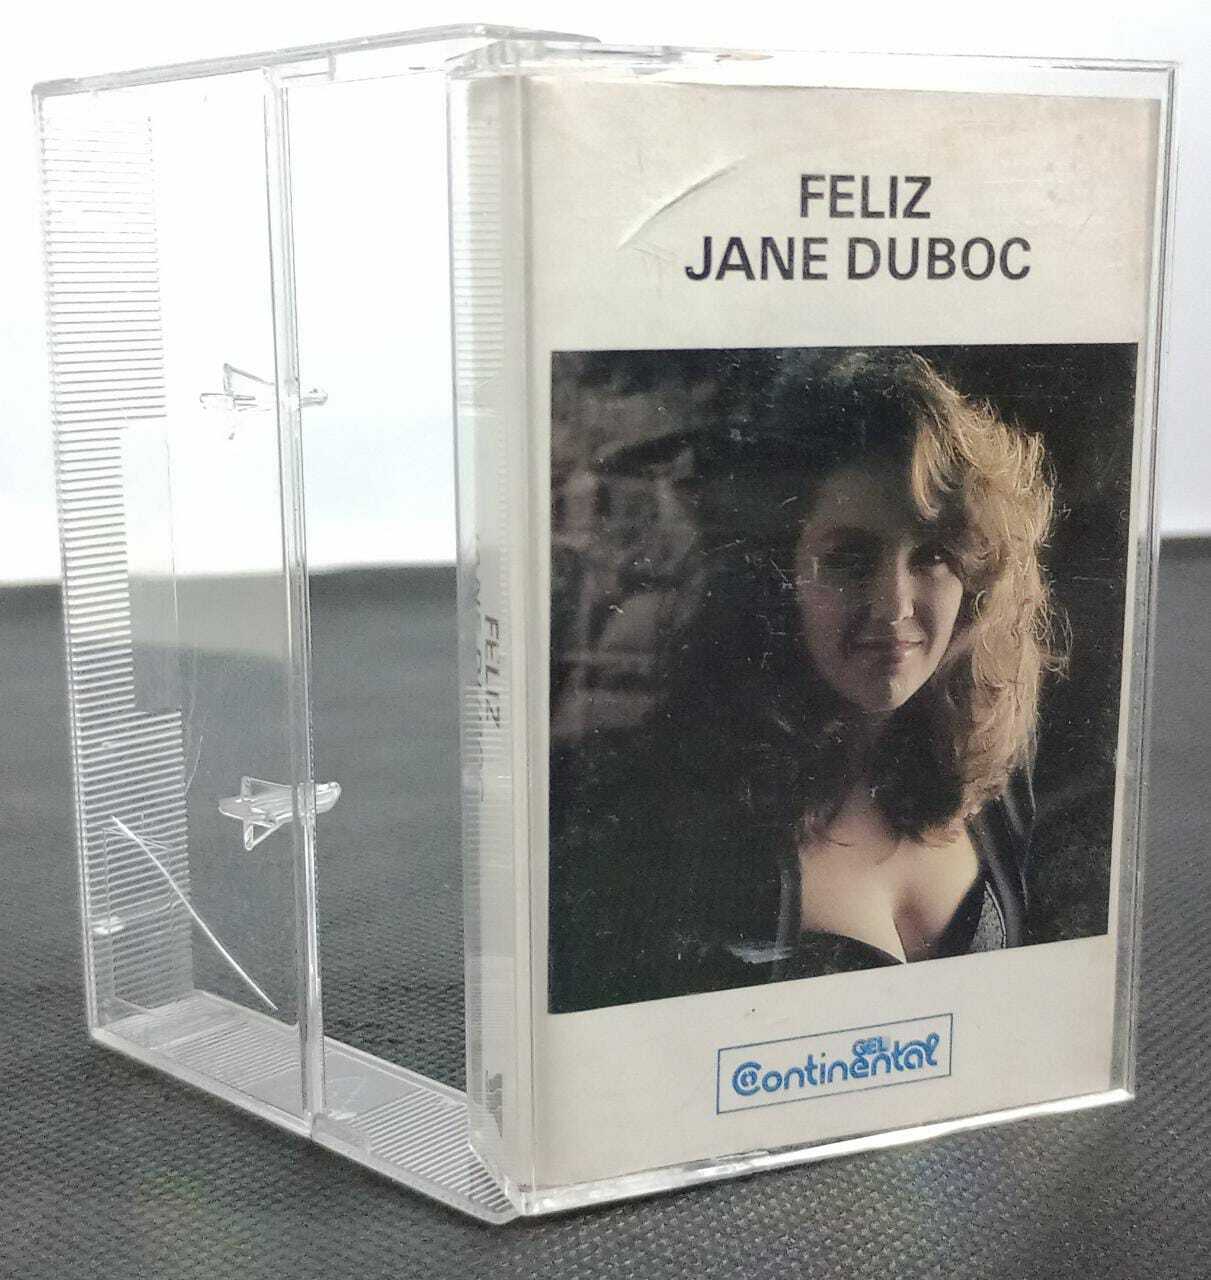 Fita K7 - Jane Duboc - Feliz